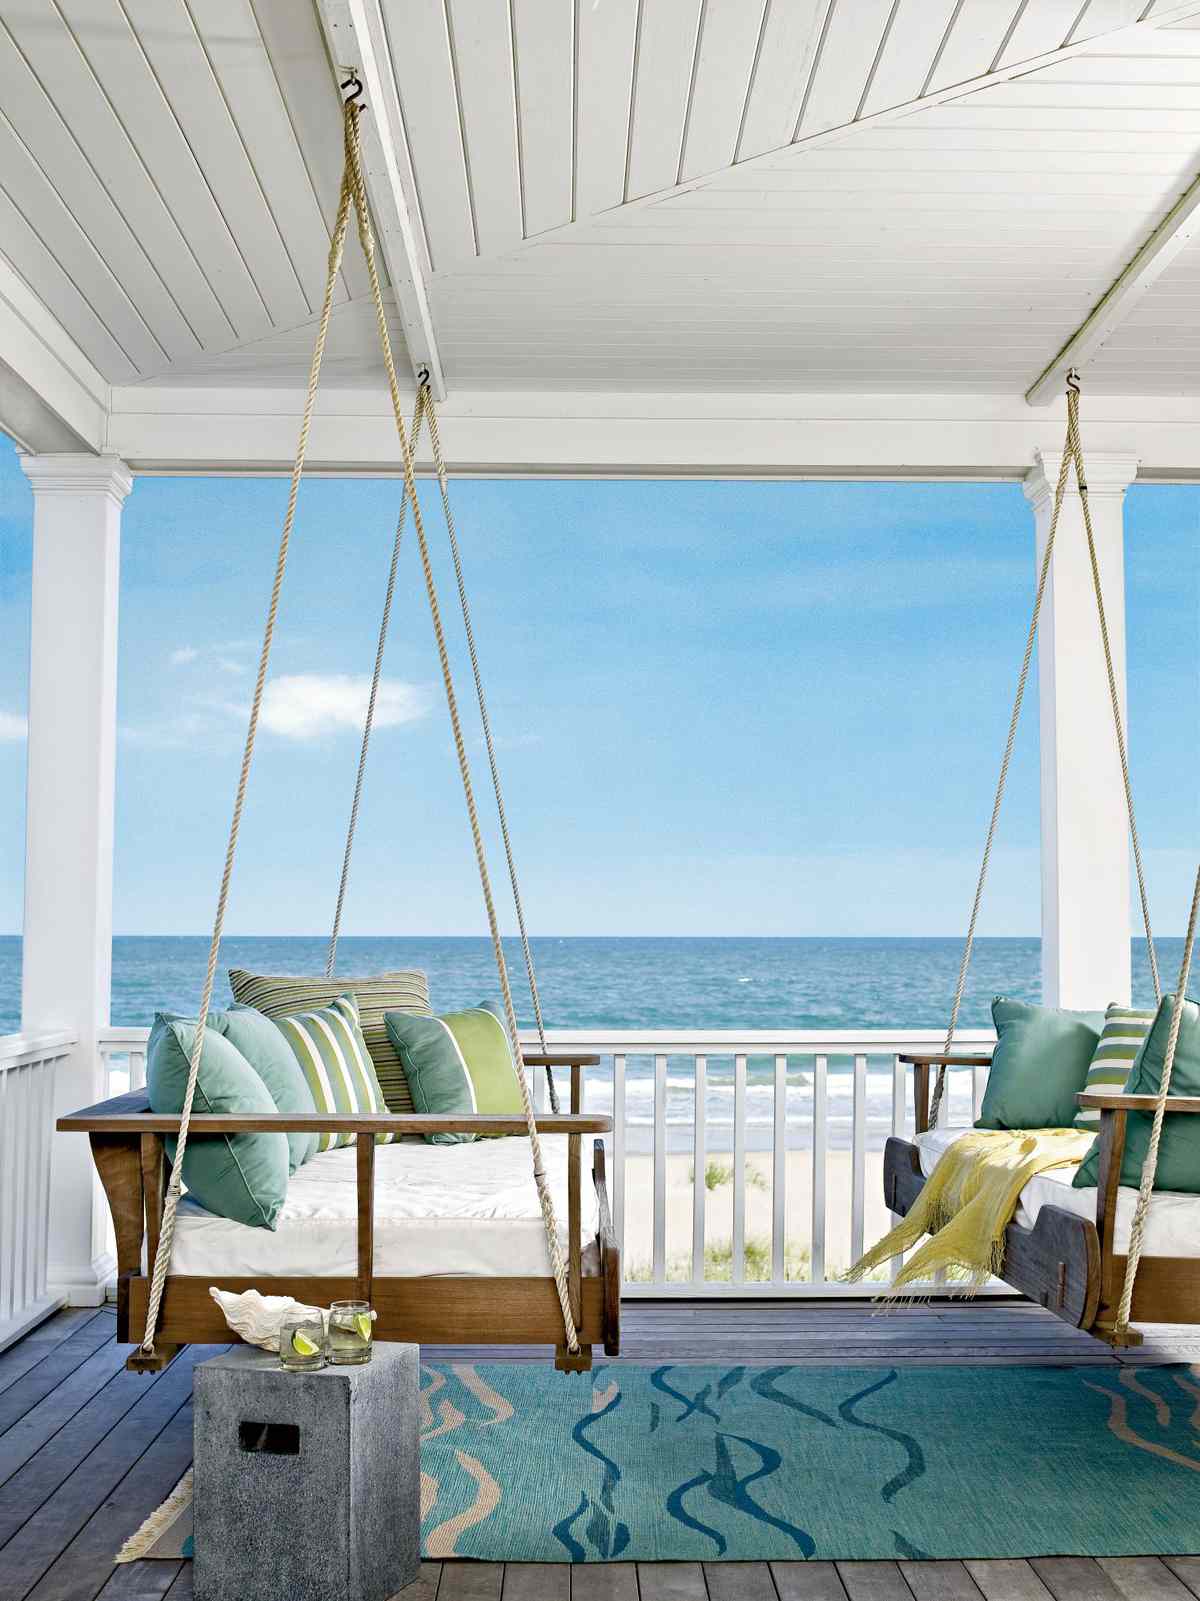 FOLDING METAL END TABLE Porch Deck Coastal Beach Summer Tropical Design & Colors 